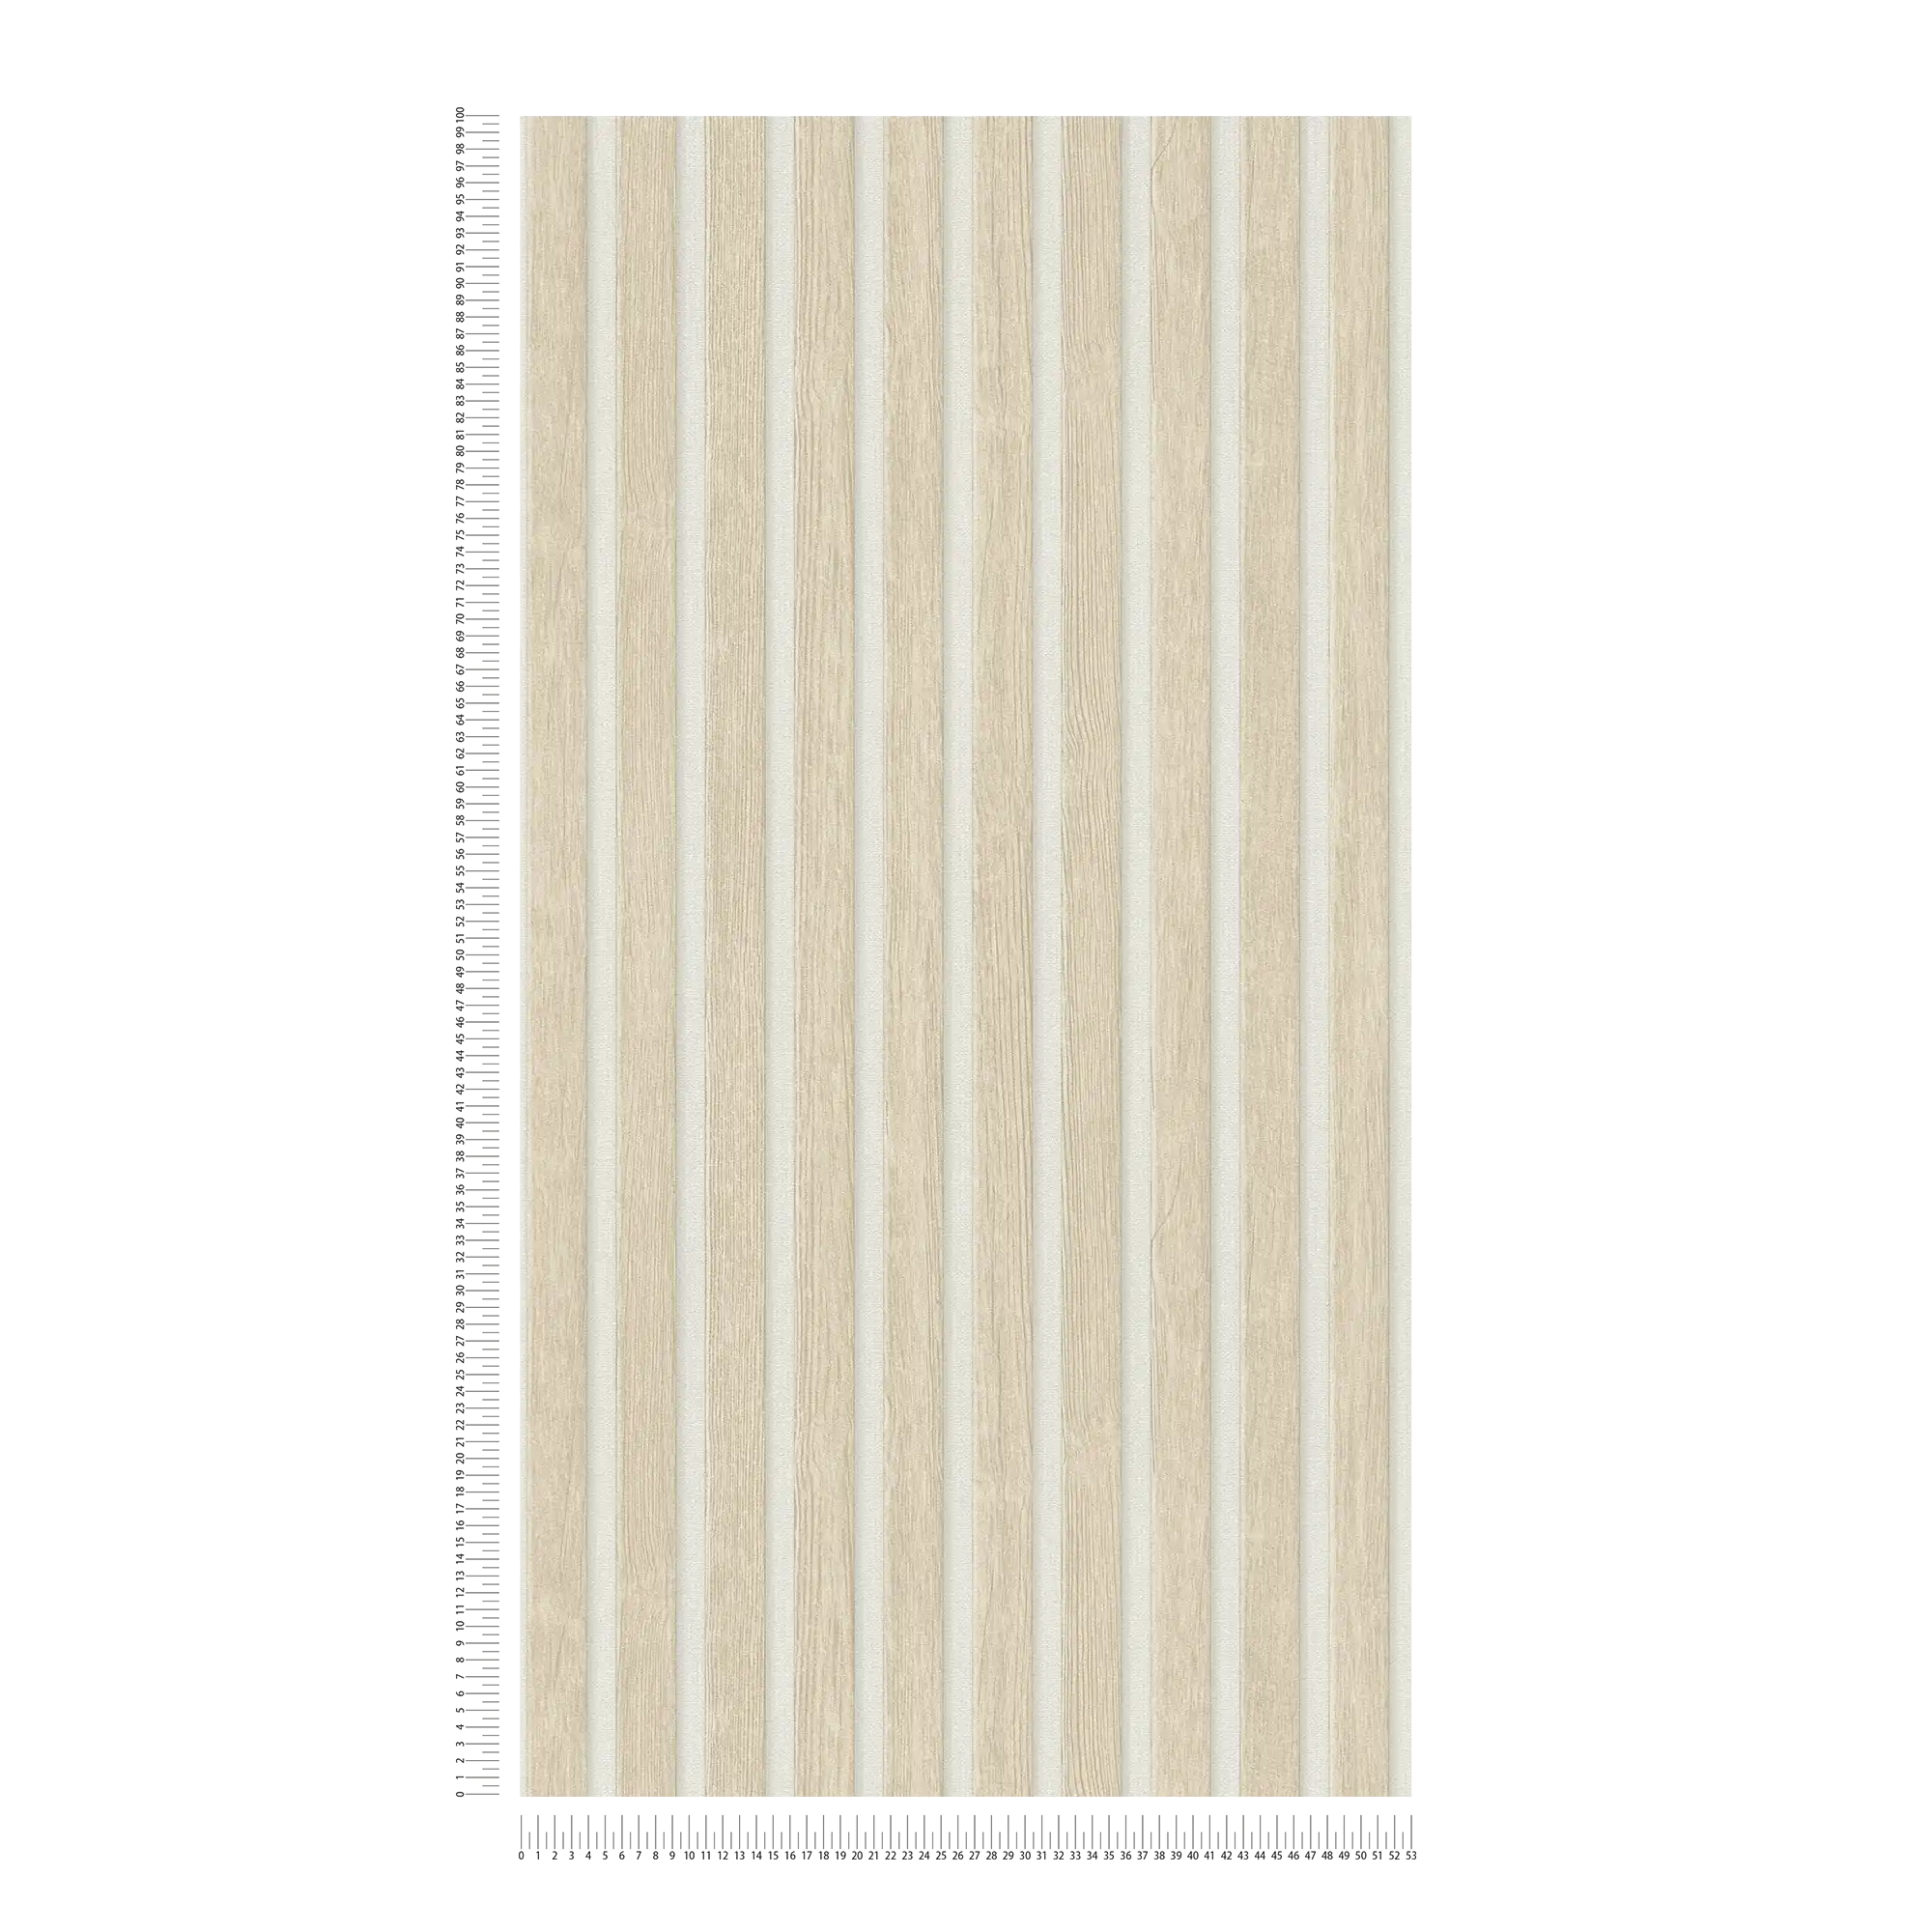             Wooden wallpaper in acoustic panel look - beige, white
        